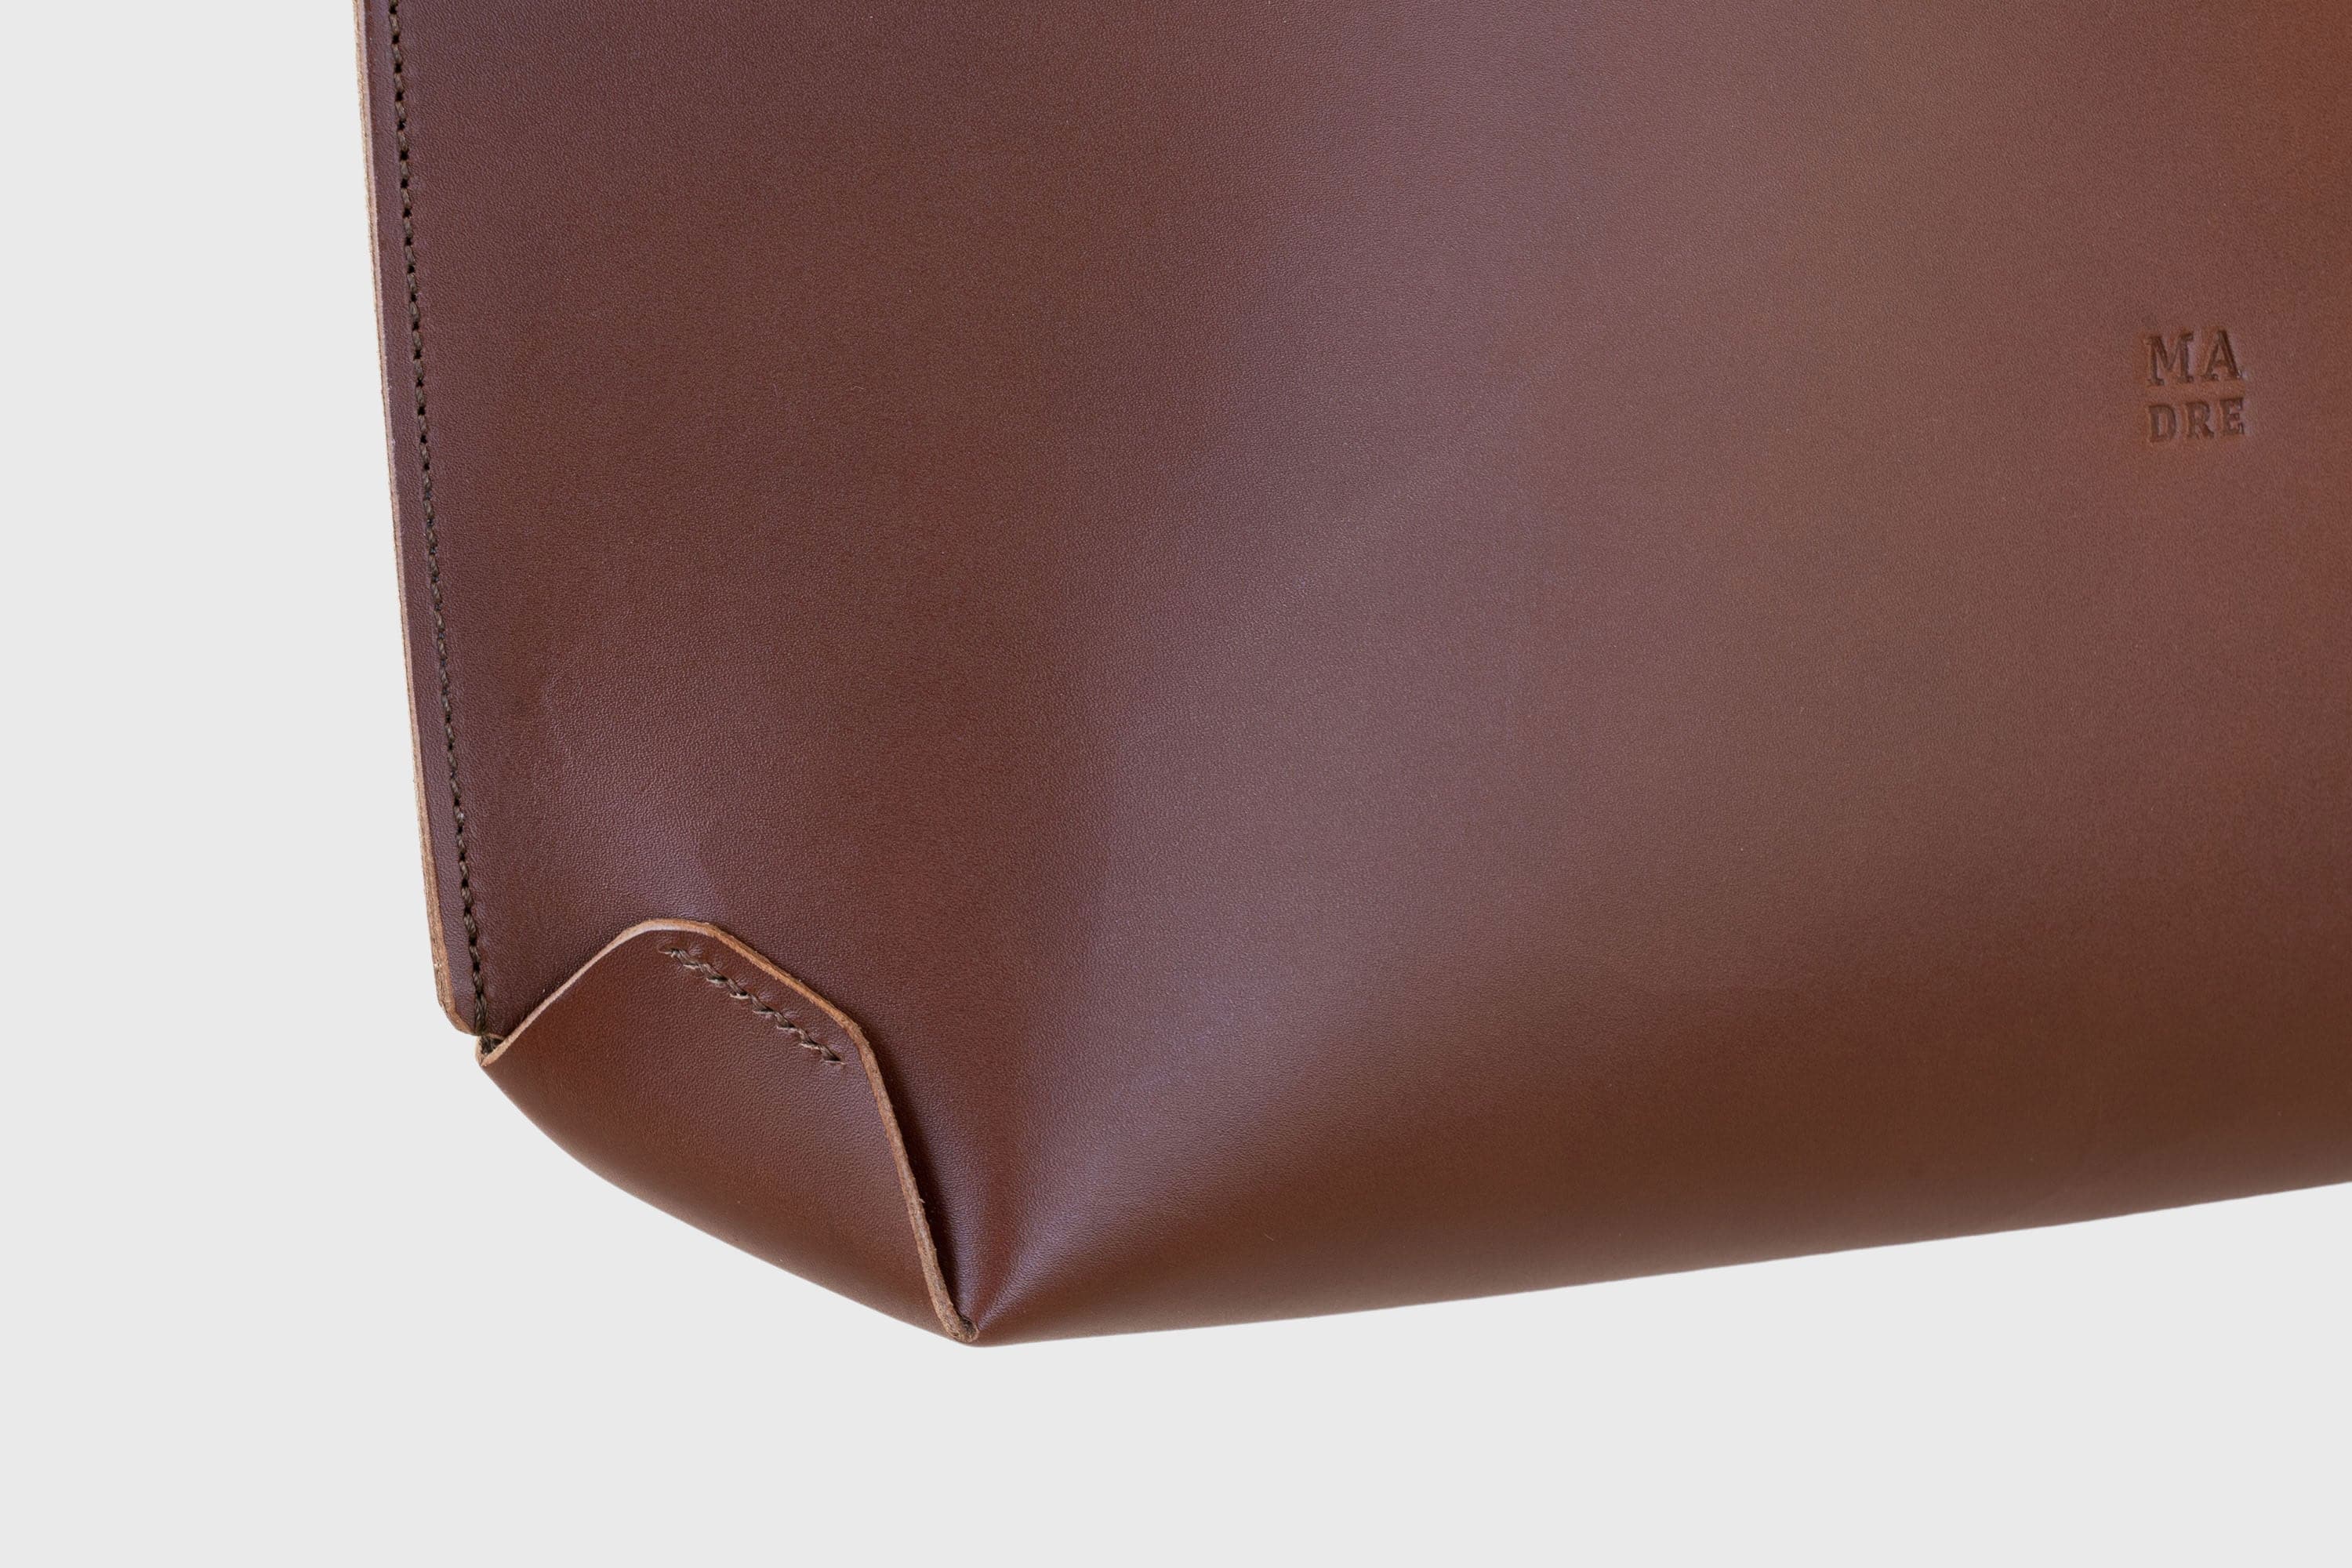 Tote Bag Dark Brown Vachetta Leather Detail Photo Bottom Folding Sustainable Design By Manuel Dreesmann Atelier Madre Barcelona Spain